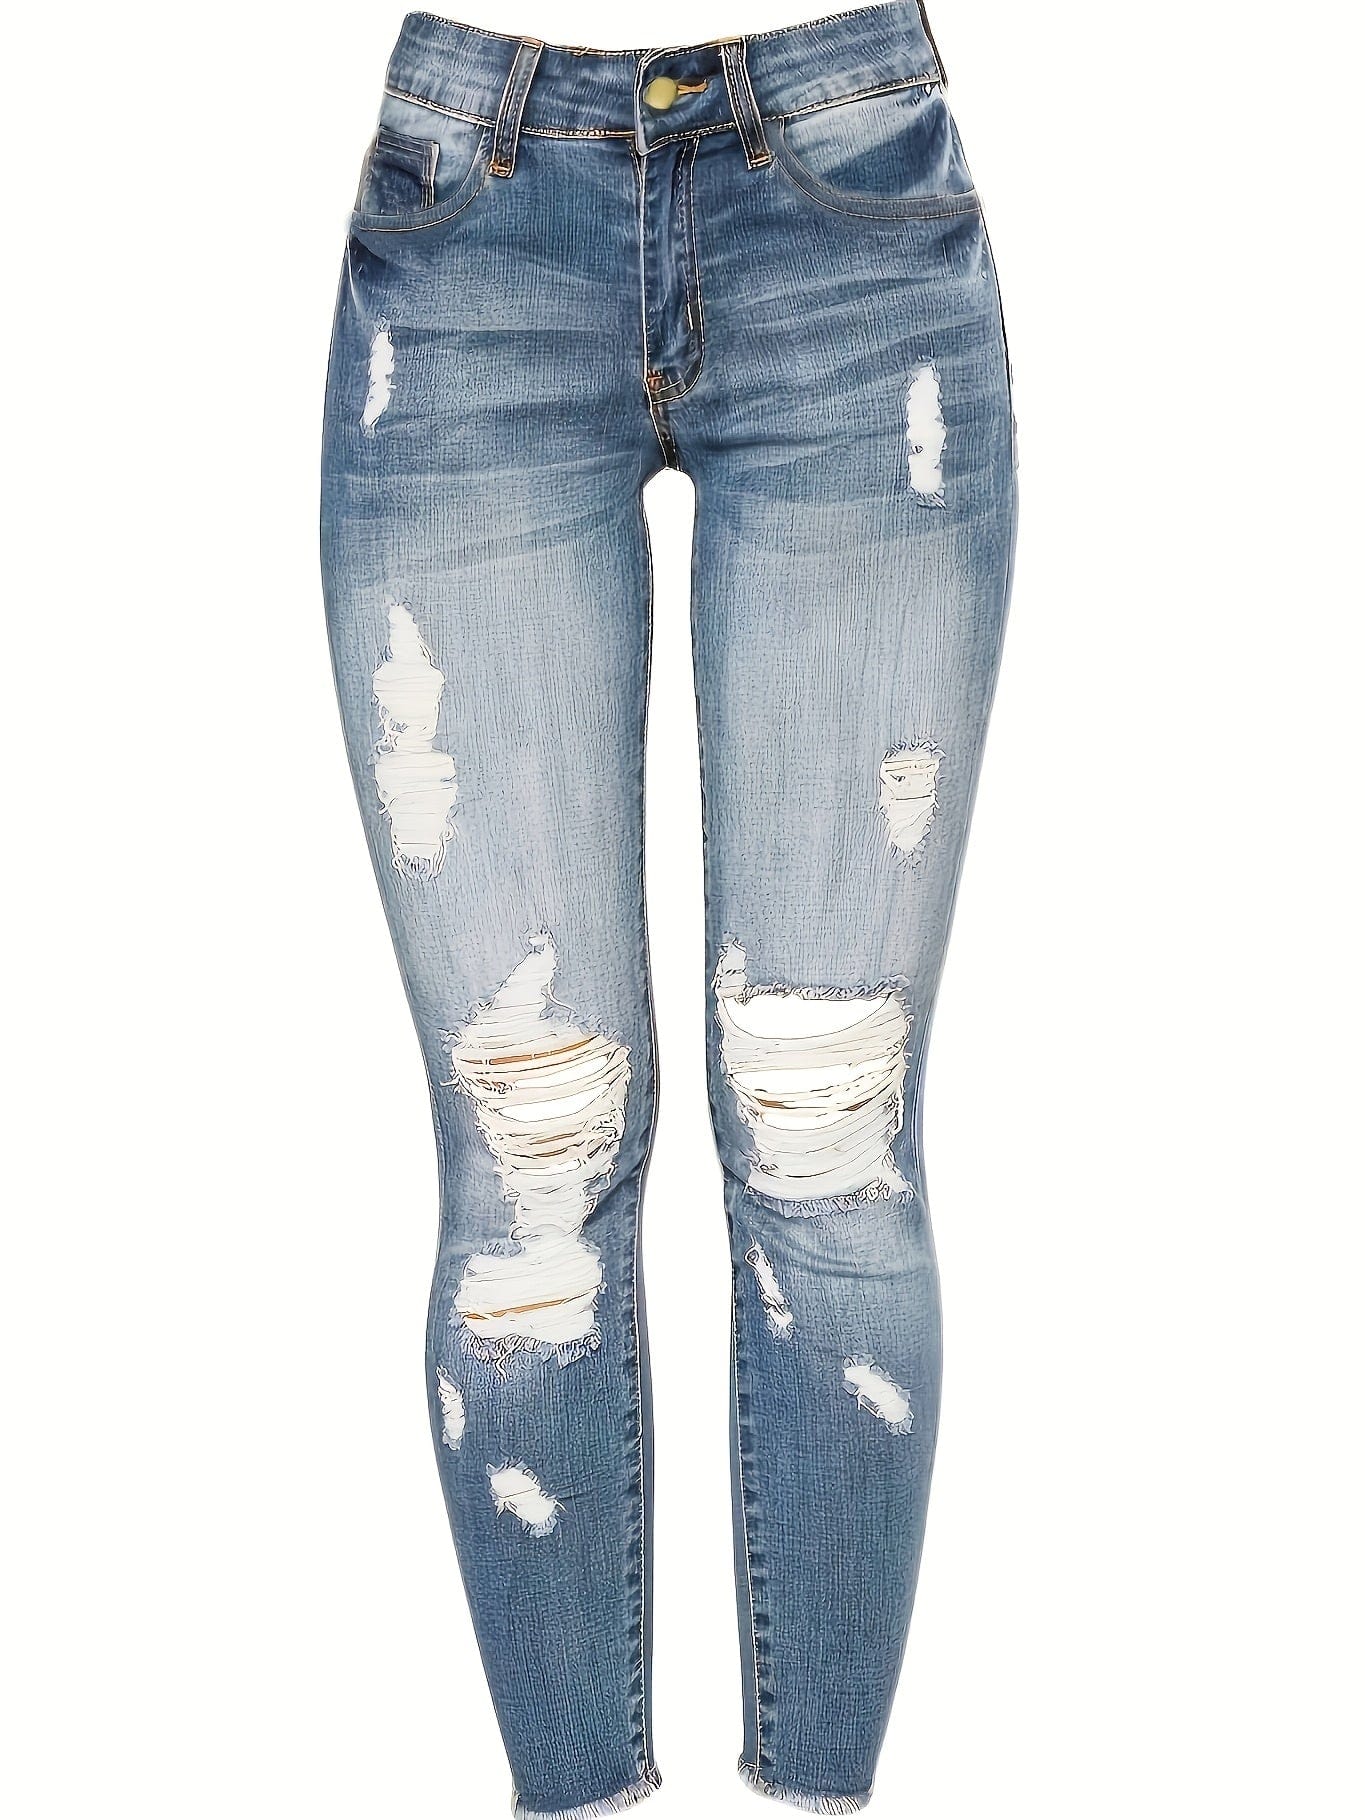 MsDressly Pants Curvy High Waist Ripped Raw Hem Cropped Skinny Denim Jeans PAN231012148LBLS(4)